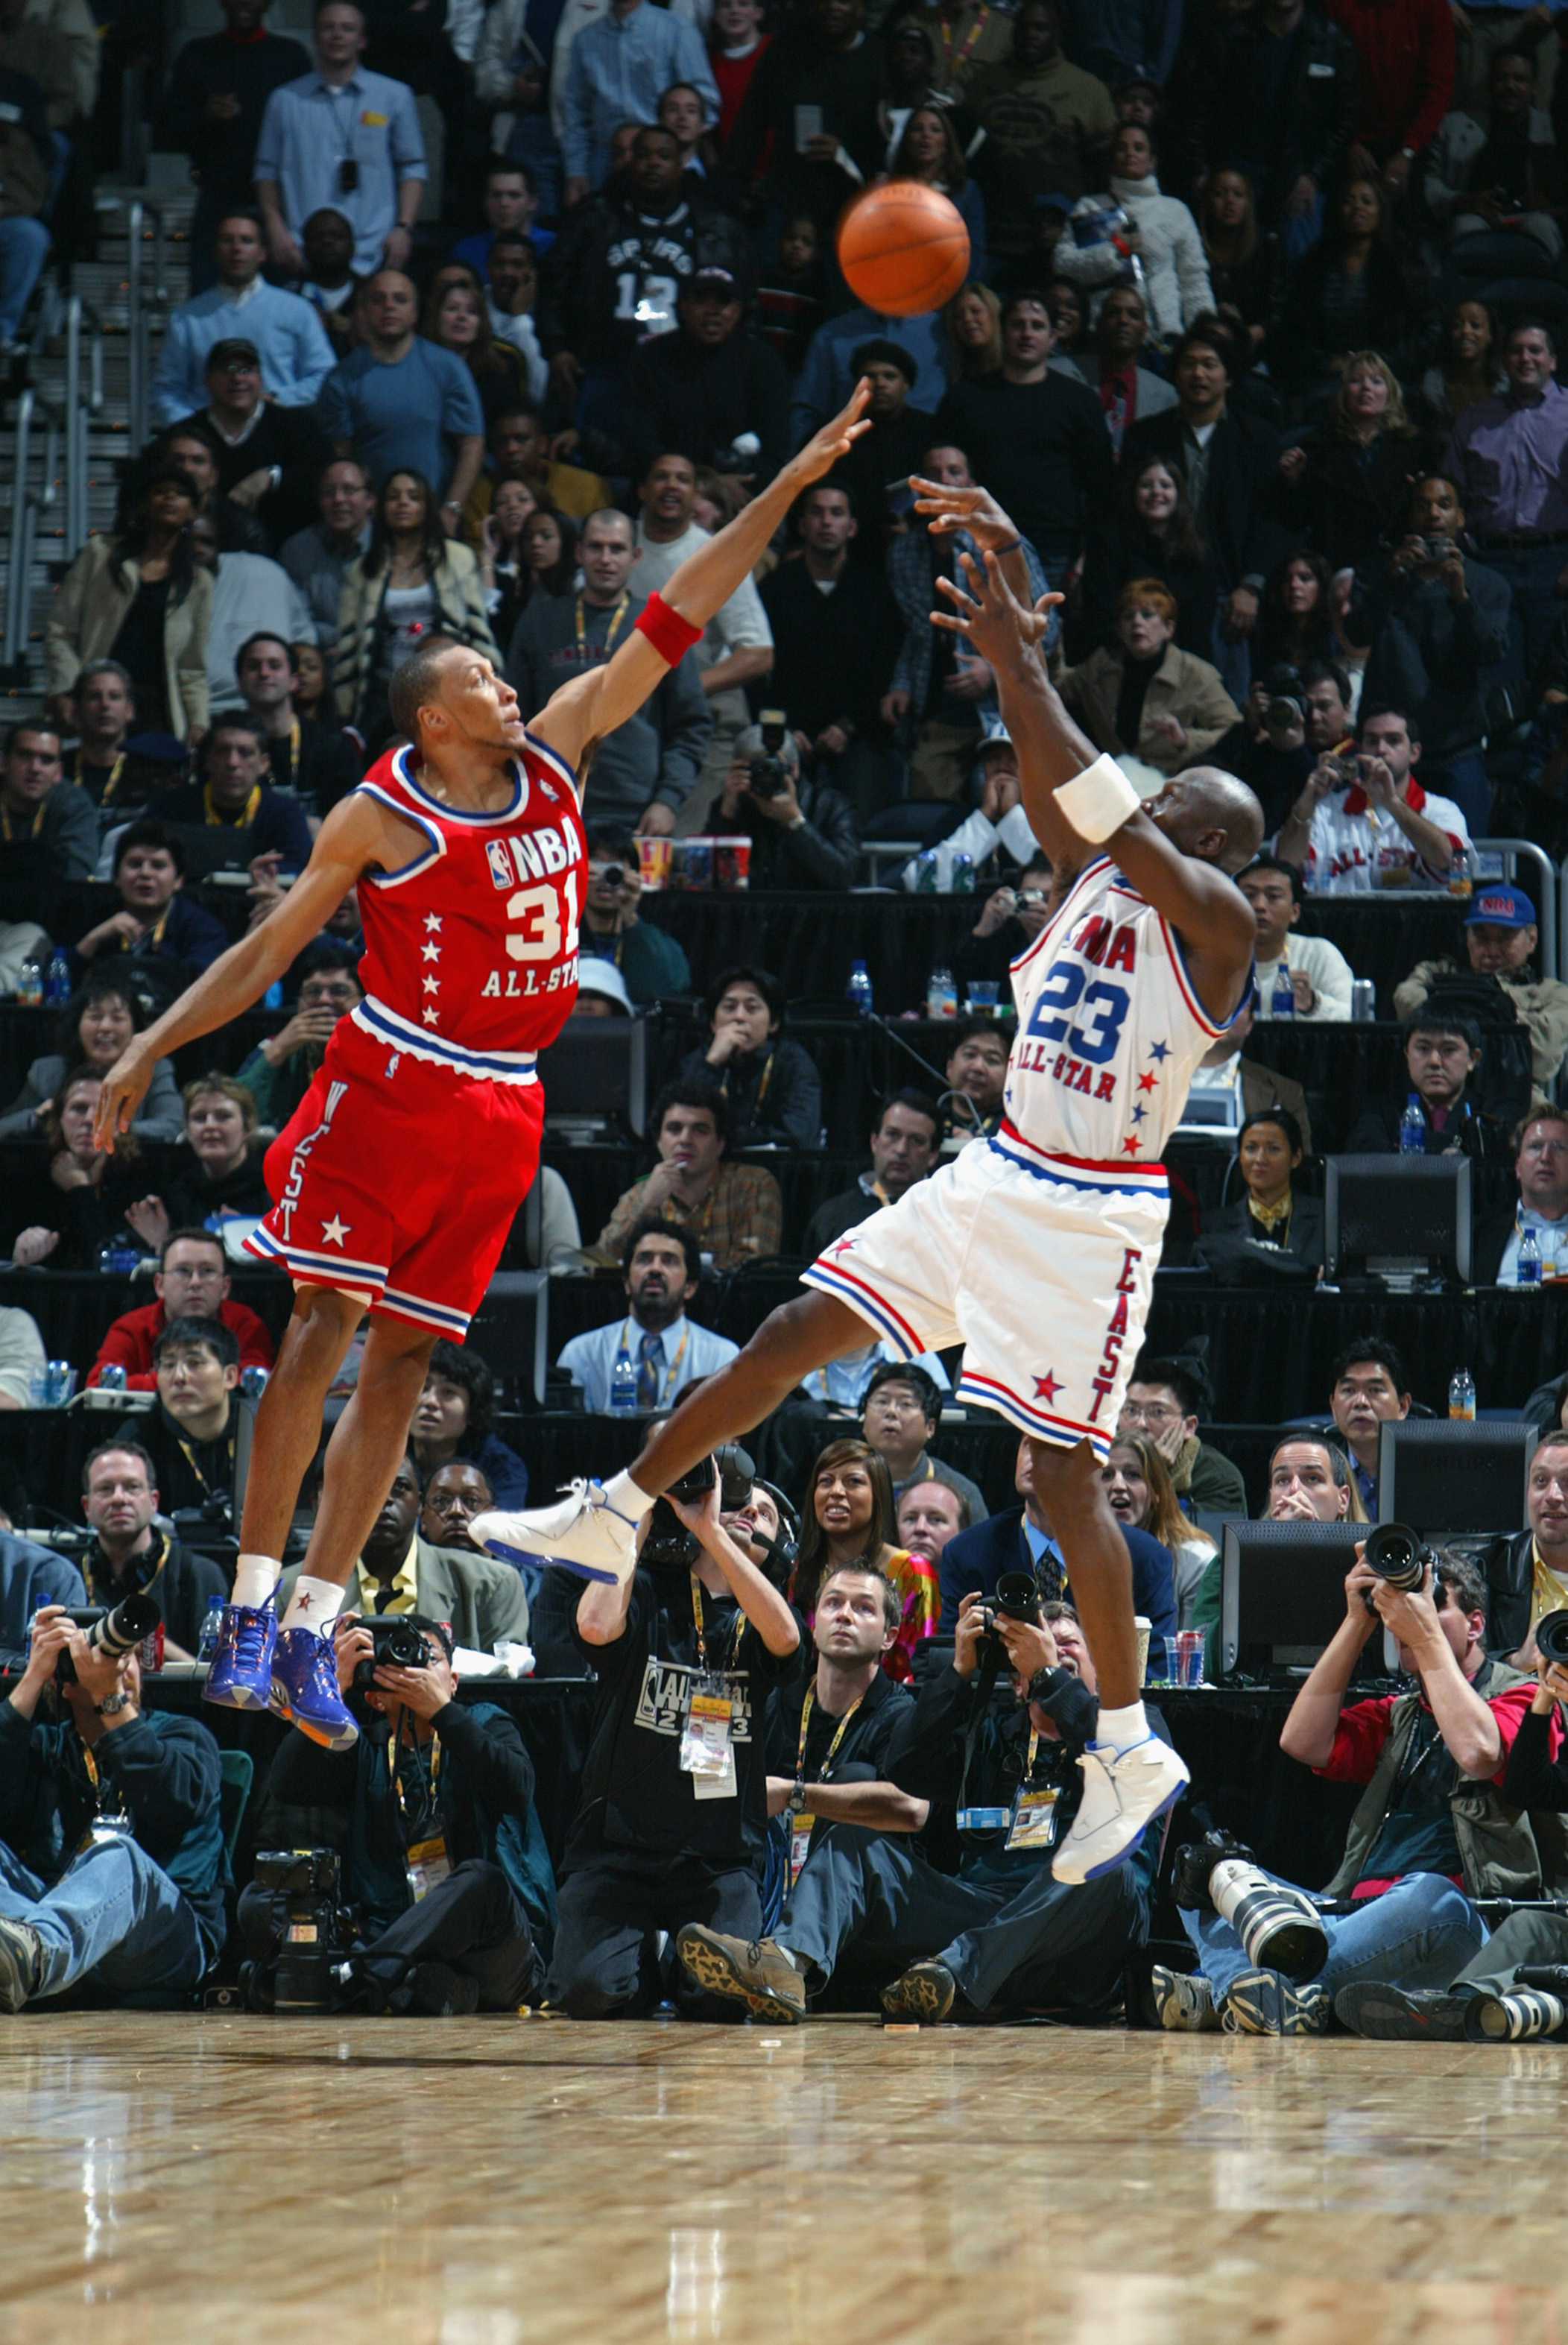 12 Photos of Michael Jordan and Kobe Bryant Through the Years